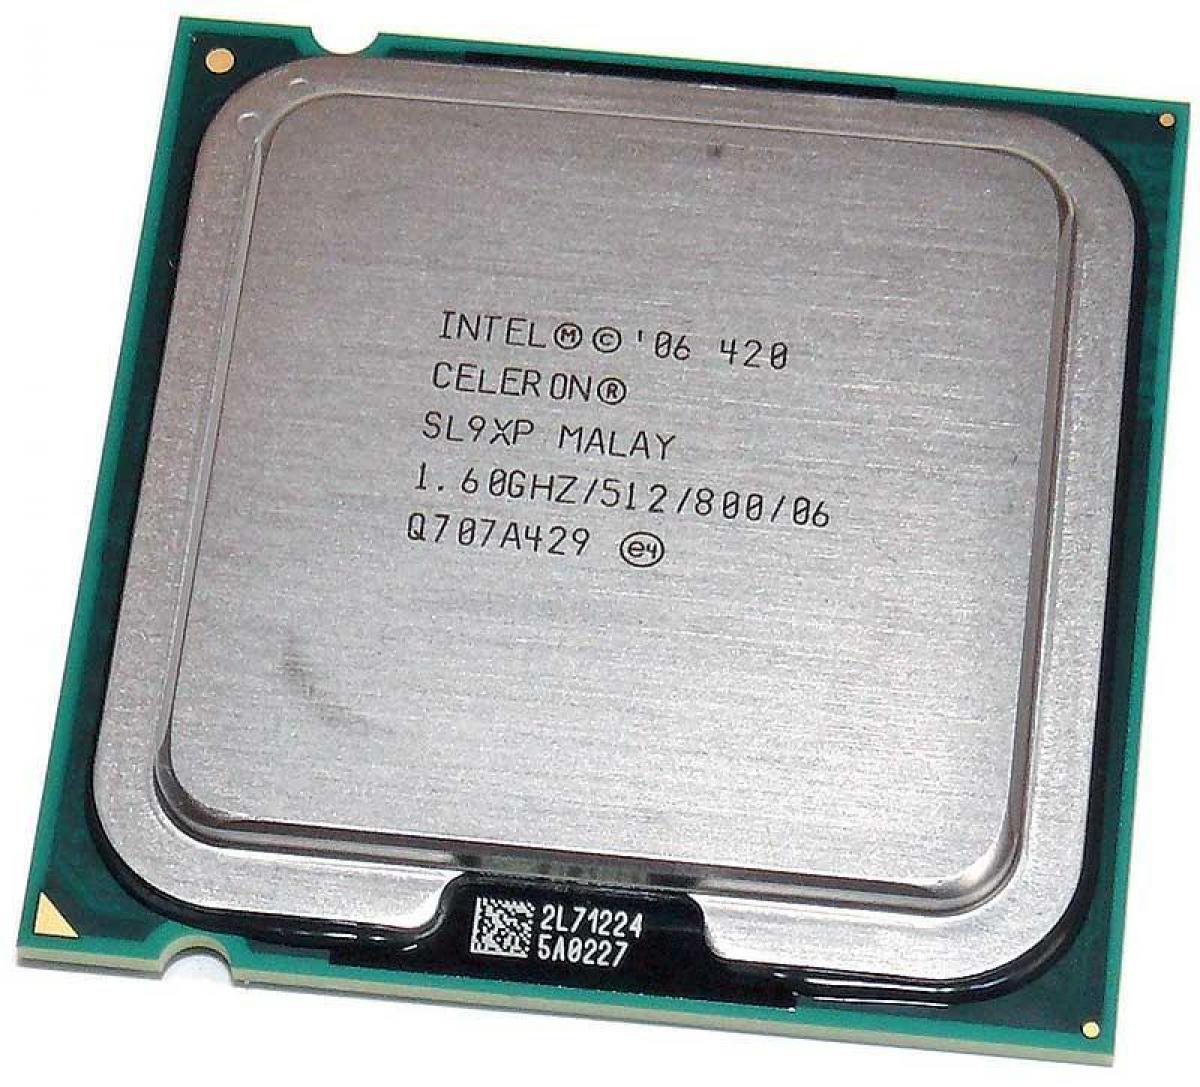 Интел селерон характеристики. Процессор Intel Celeron 6548. Процессор Intel Celeron 420 1.6 ГГЦ. Процессор Интел 04 Celeron. Интел 0.2 Celeron Malay.